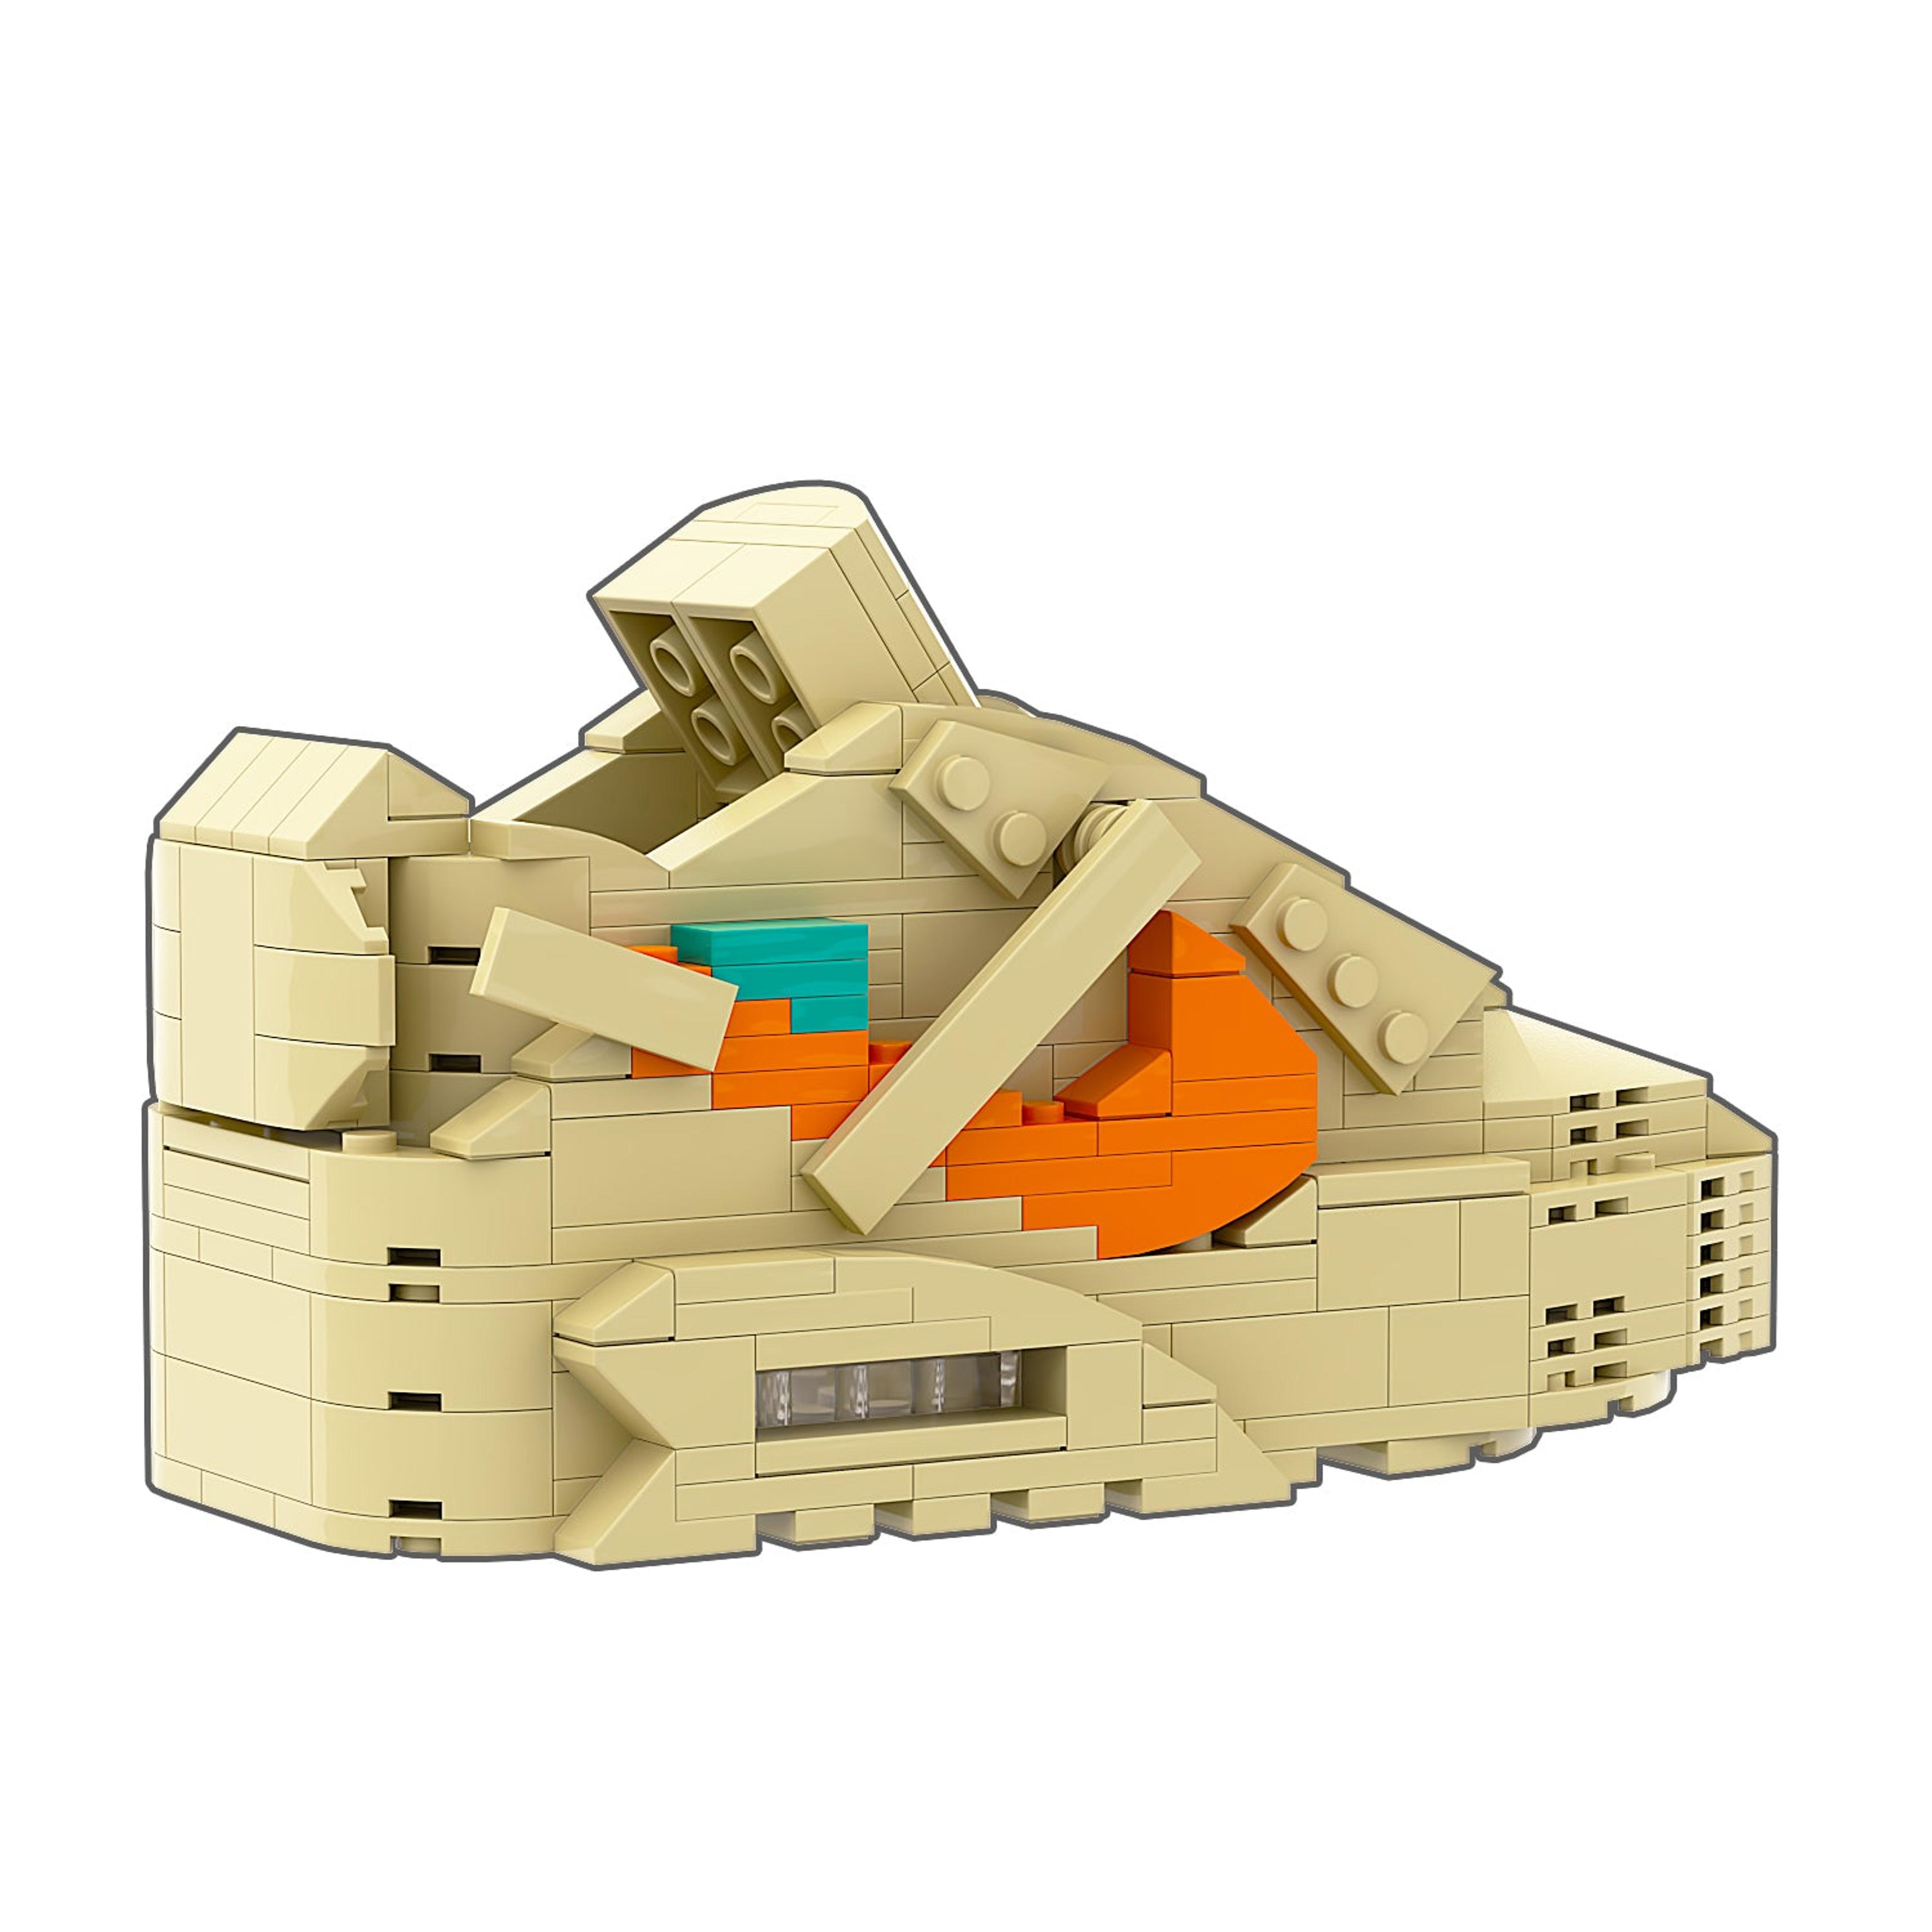 Alternate View 7 of REGULAR Air Max 90 "Desert Ore" Sneaker Bricks with Mini Figure